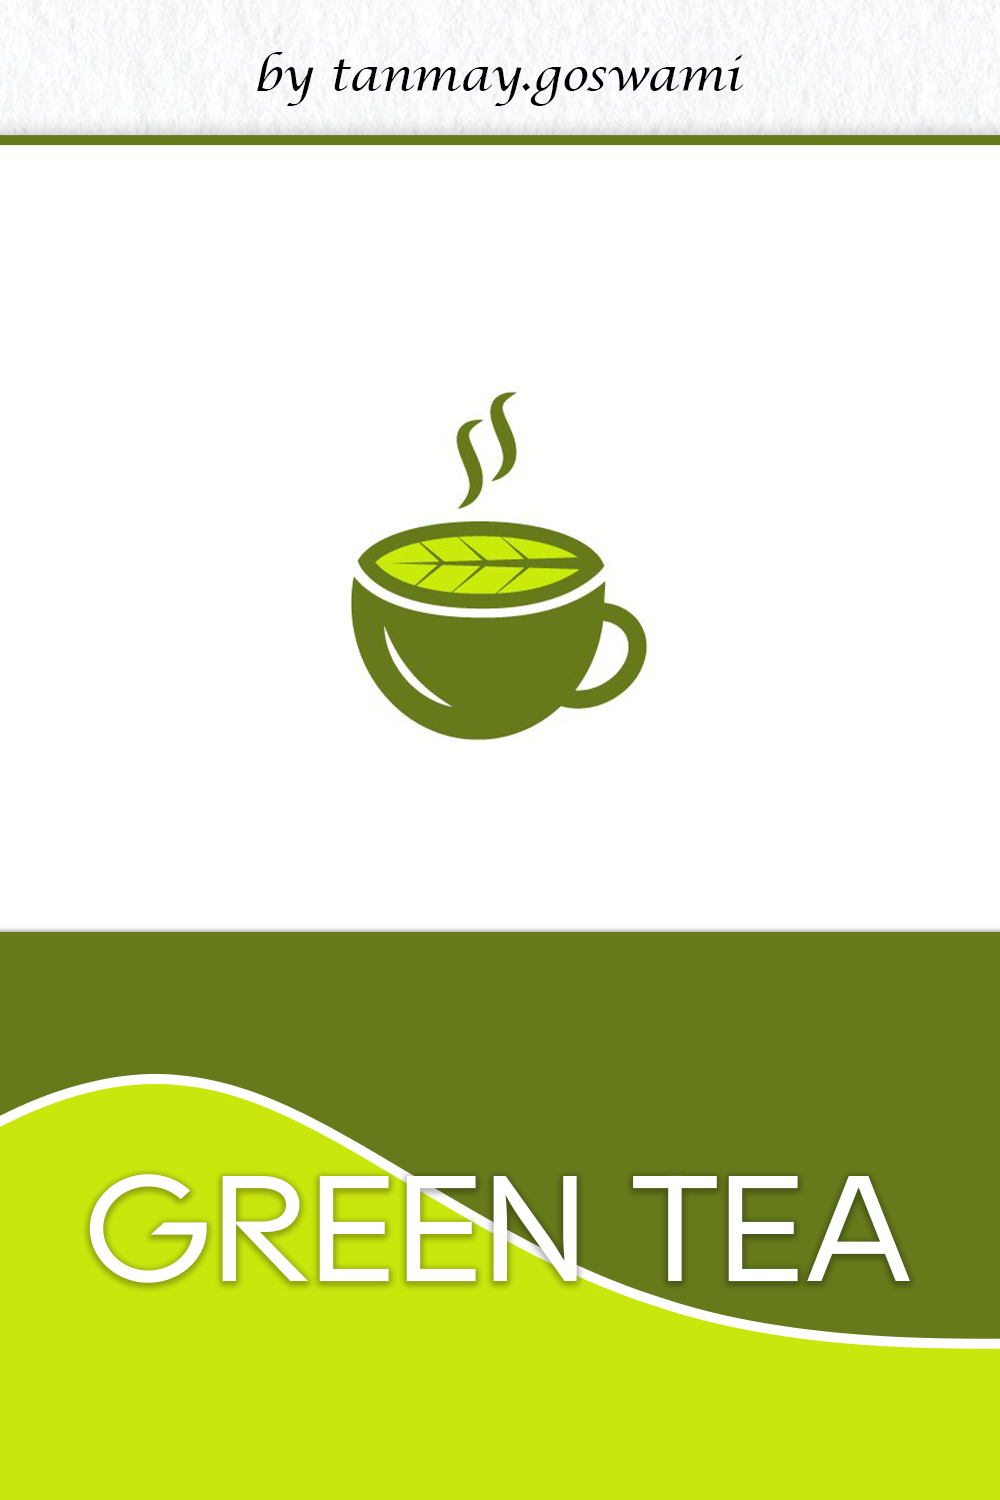 Green tea illustration in a classic colors.